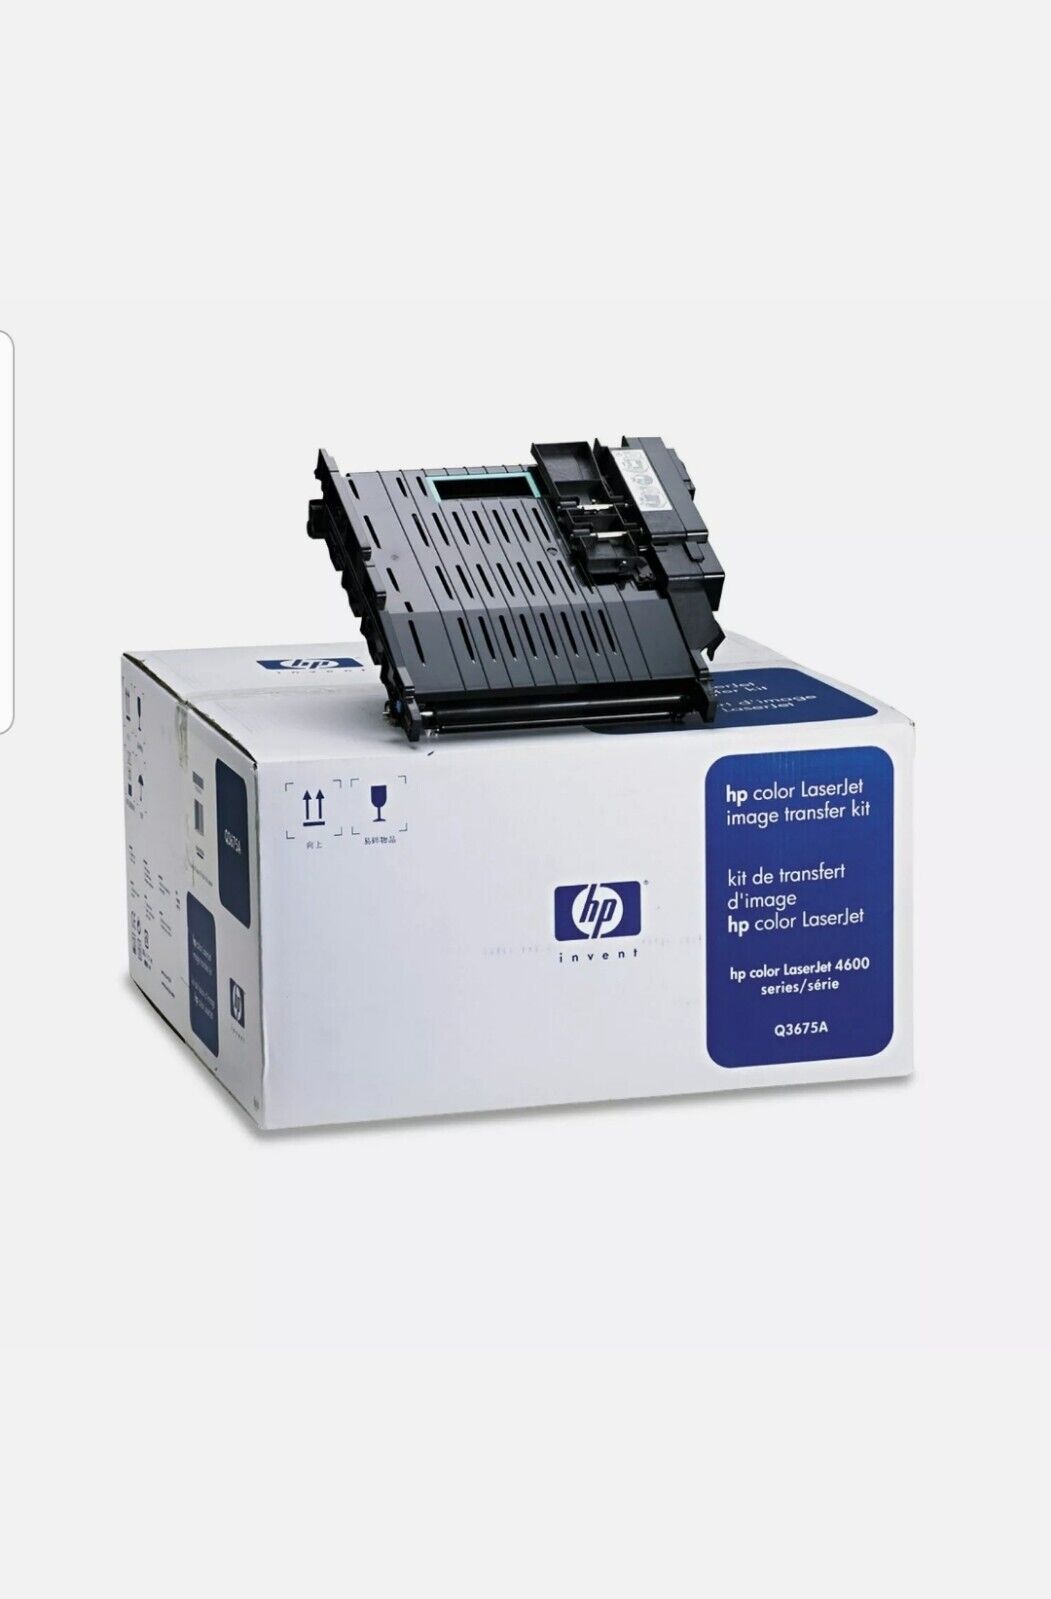 HP Color LaserJet Q3675A Transfer Kit Professional Smart Printing Technology